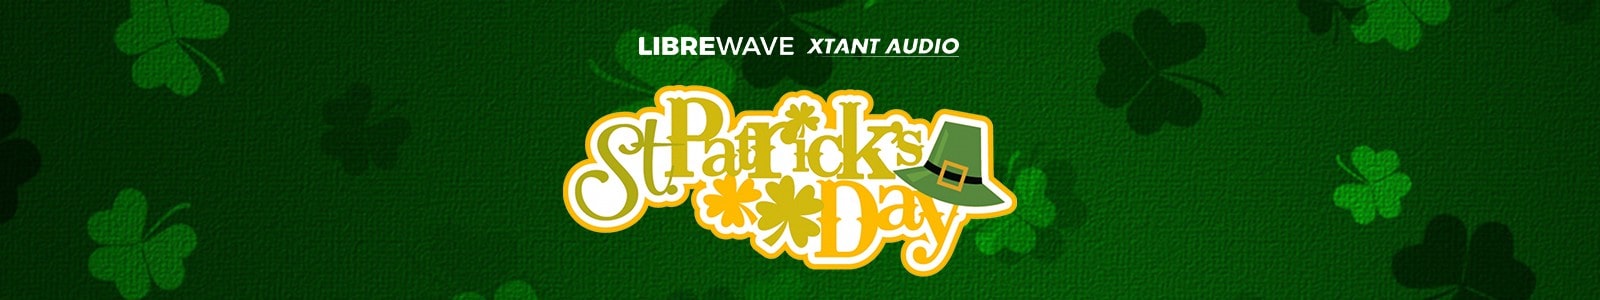 St. Patrick's Irish Bundle by Xtant Audio and Libre Wave